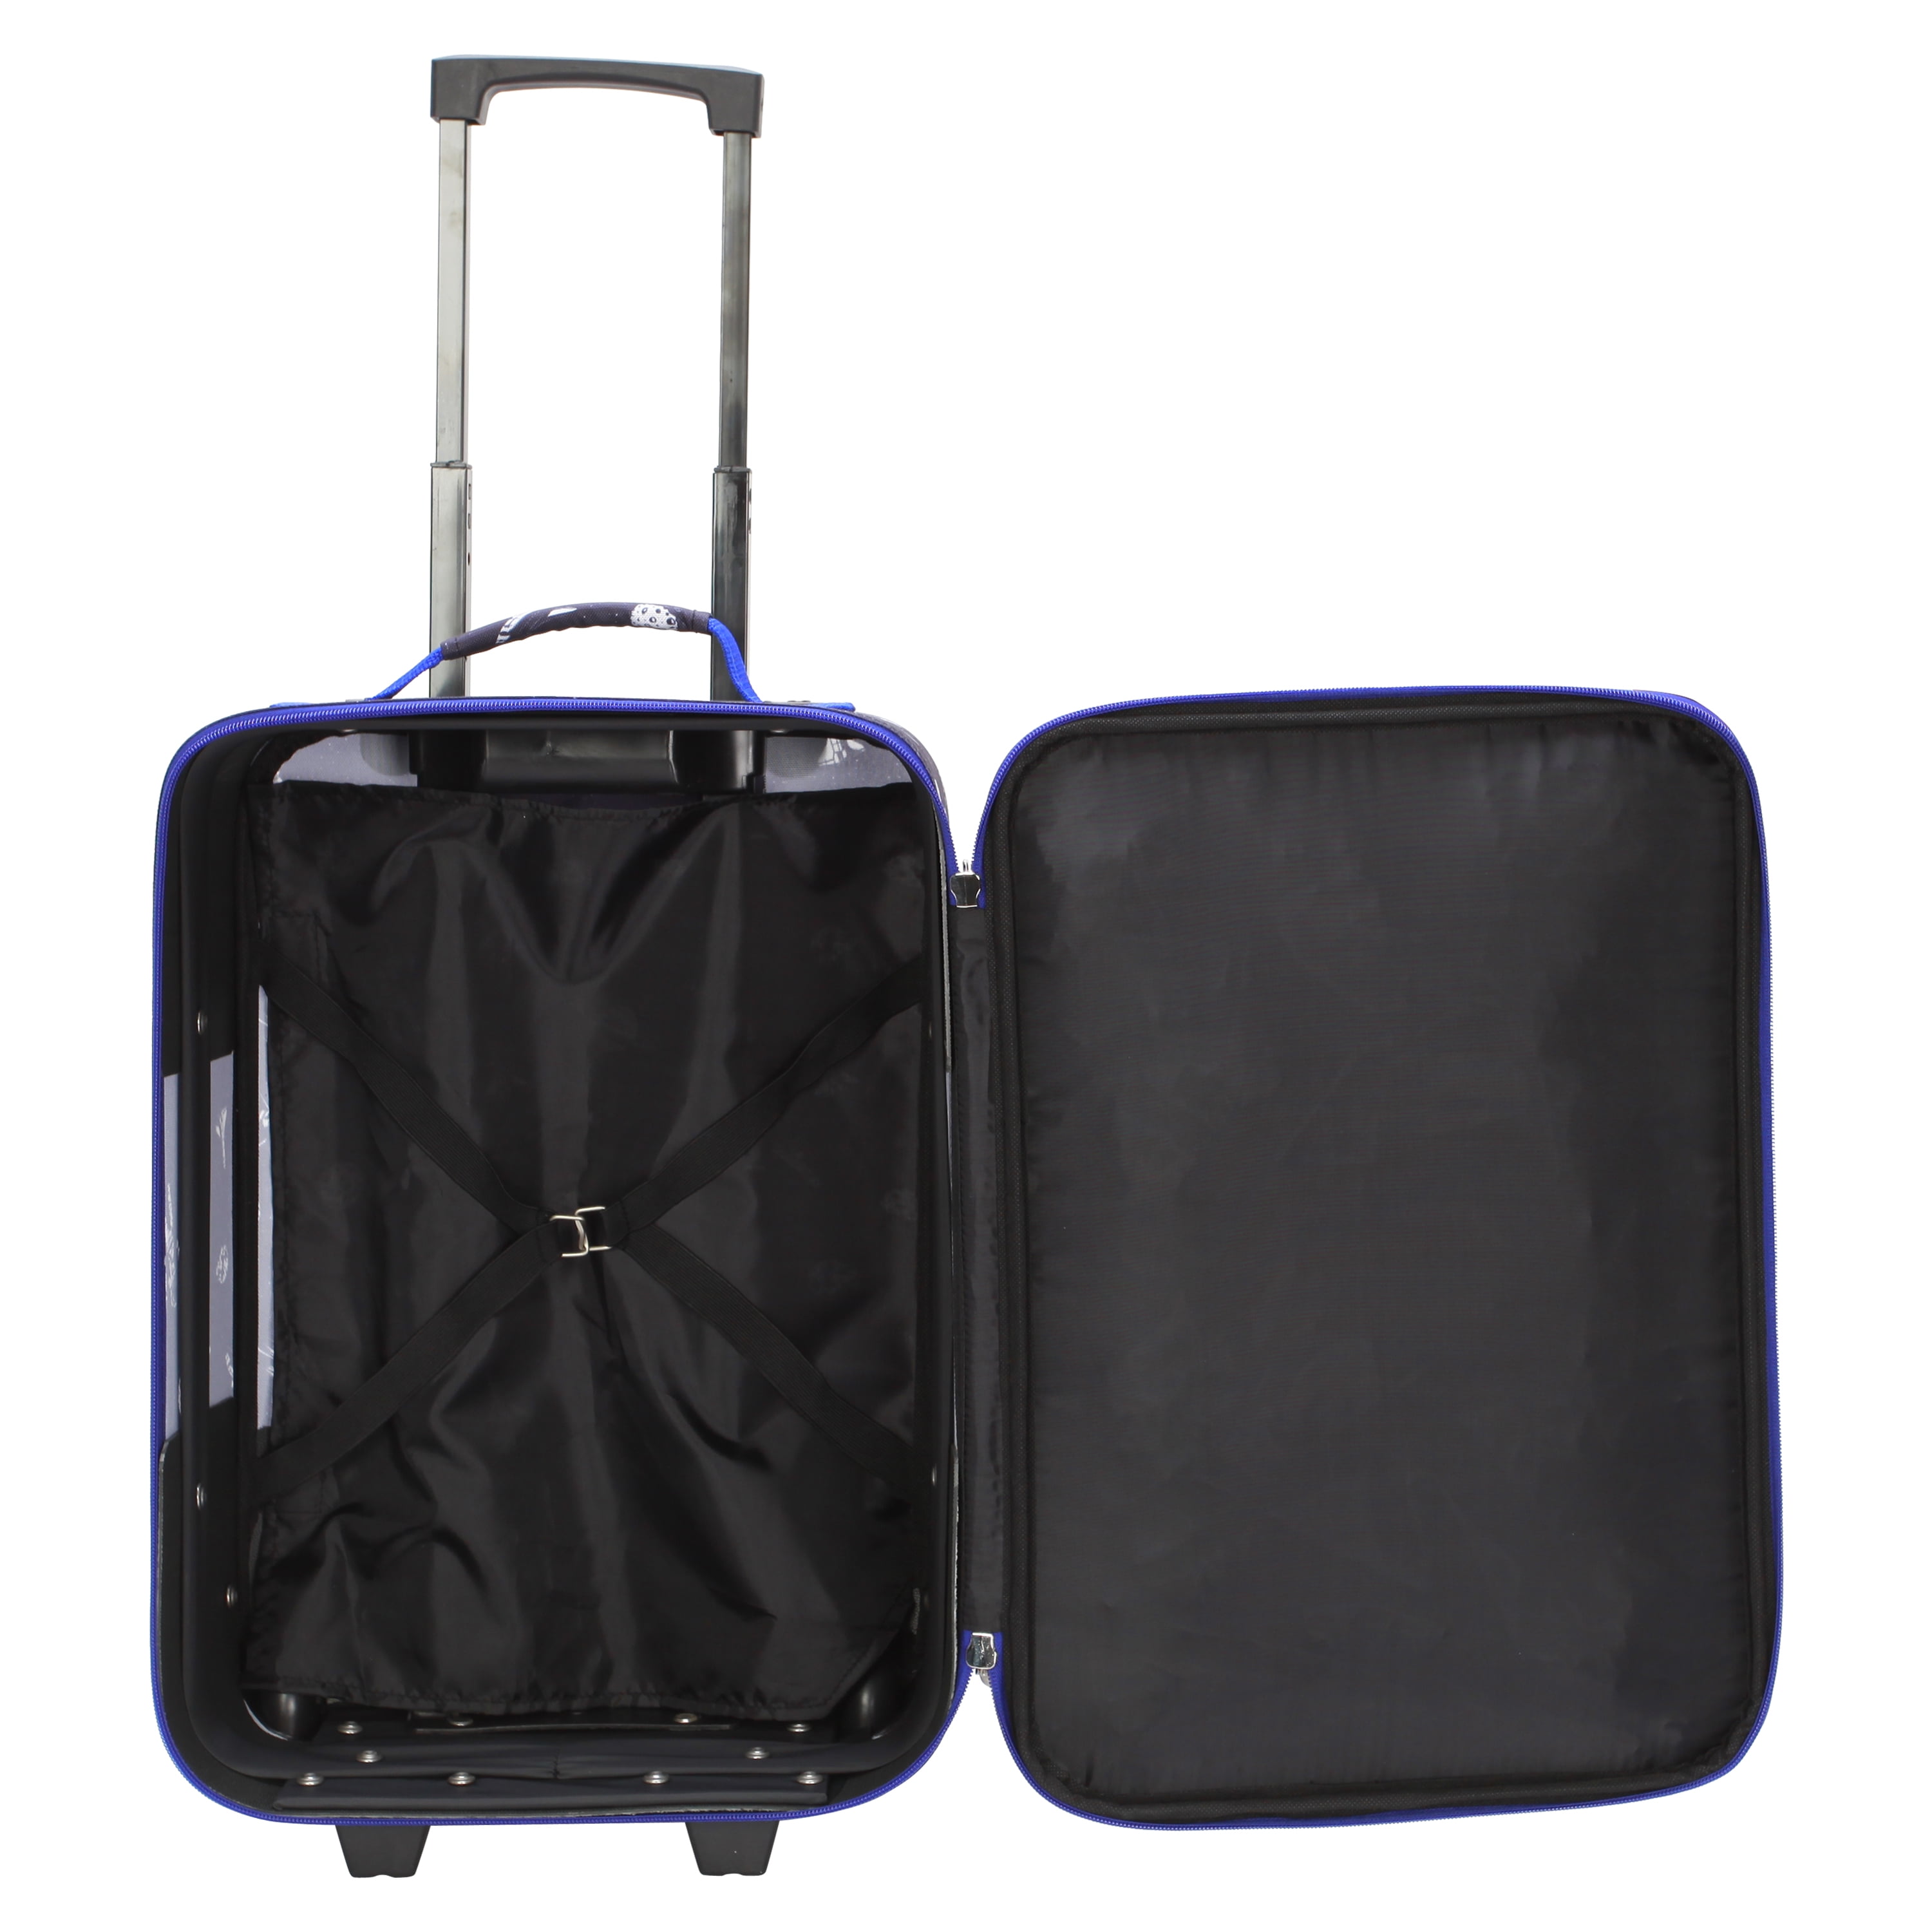 Protege Pilot Case 18 Softside Carry-on Luggage, Black 